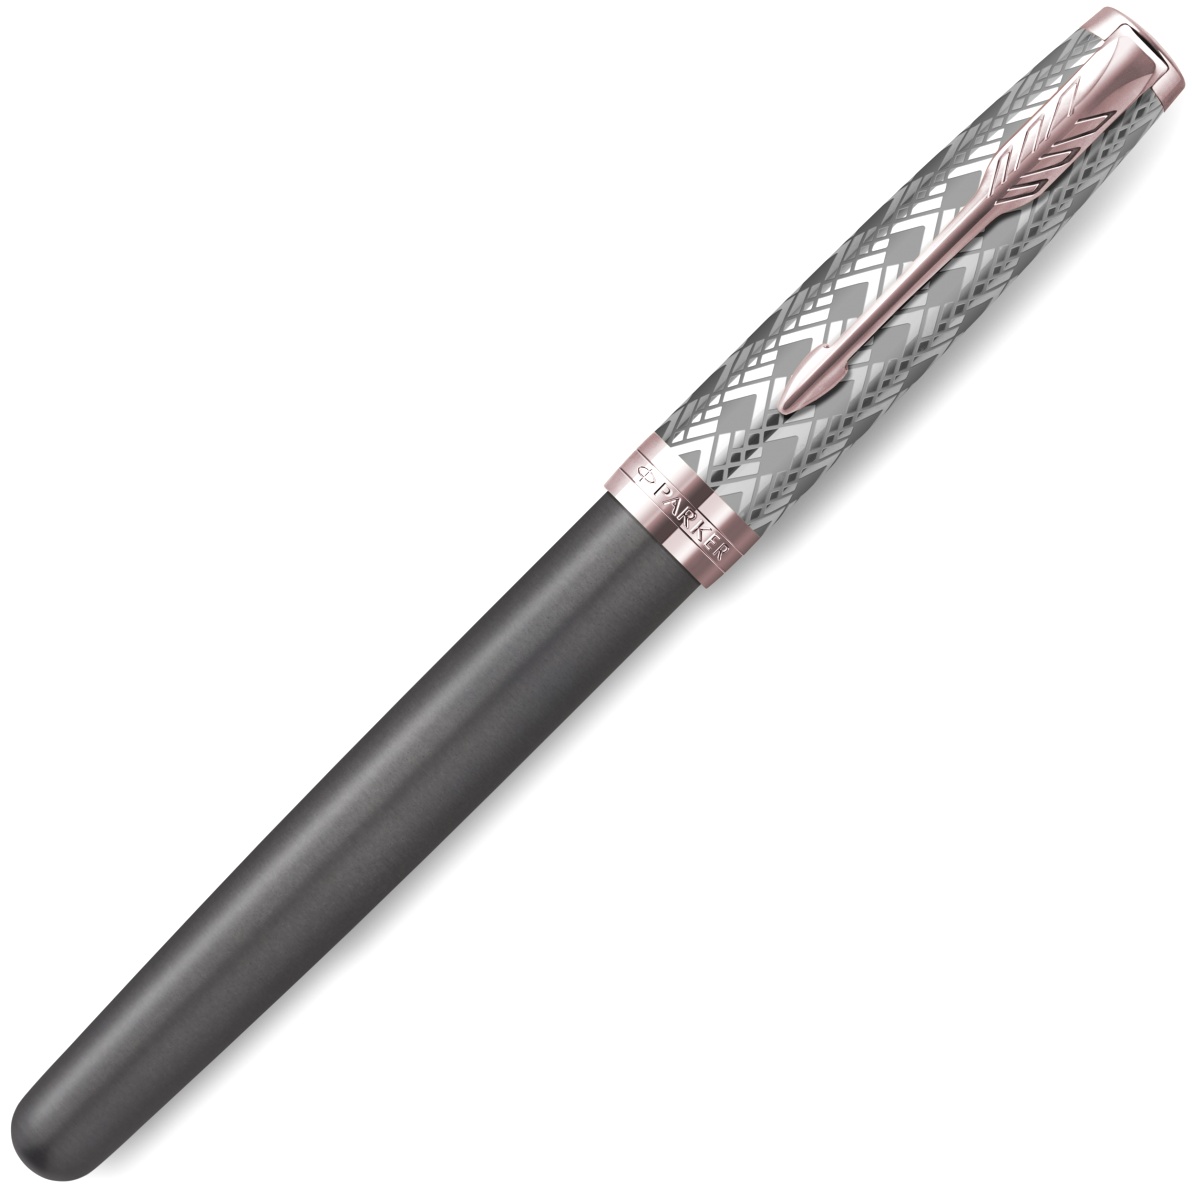  Ручка-роллер Parker Sonnet Premium T537, Metal Grey PGT, фото 2